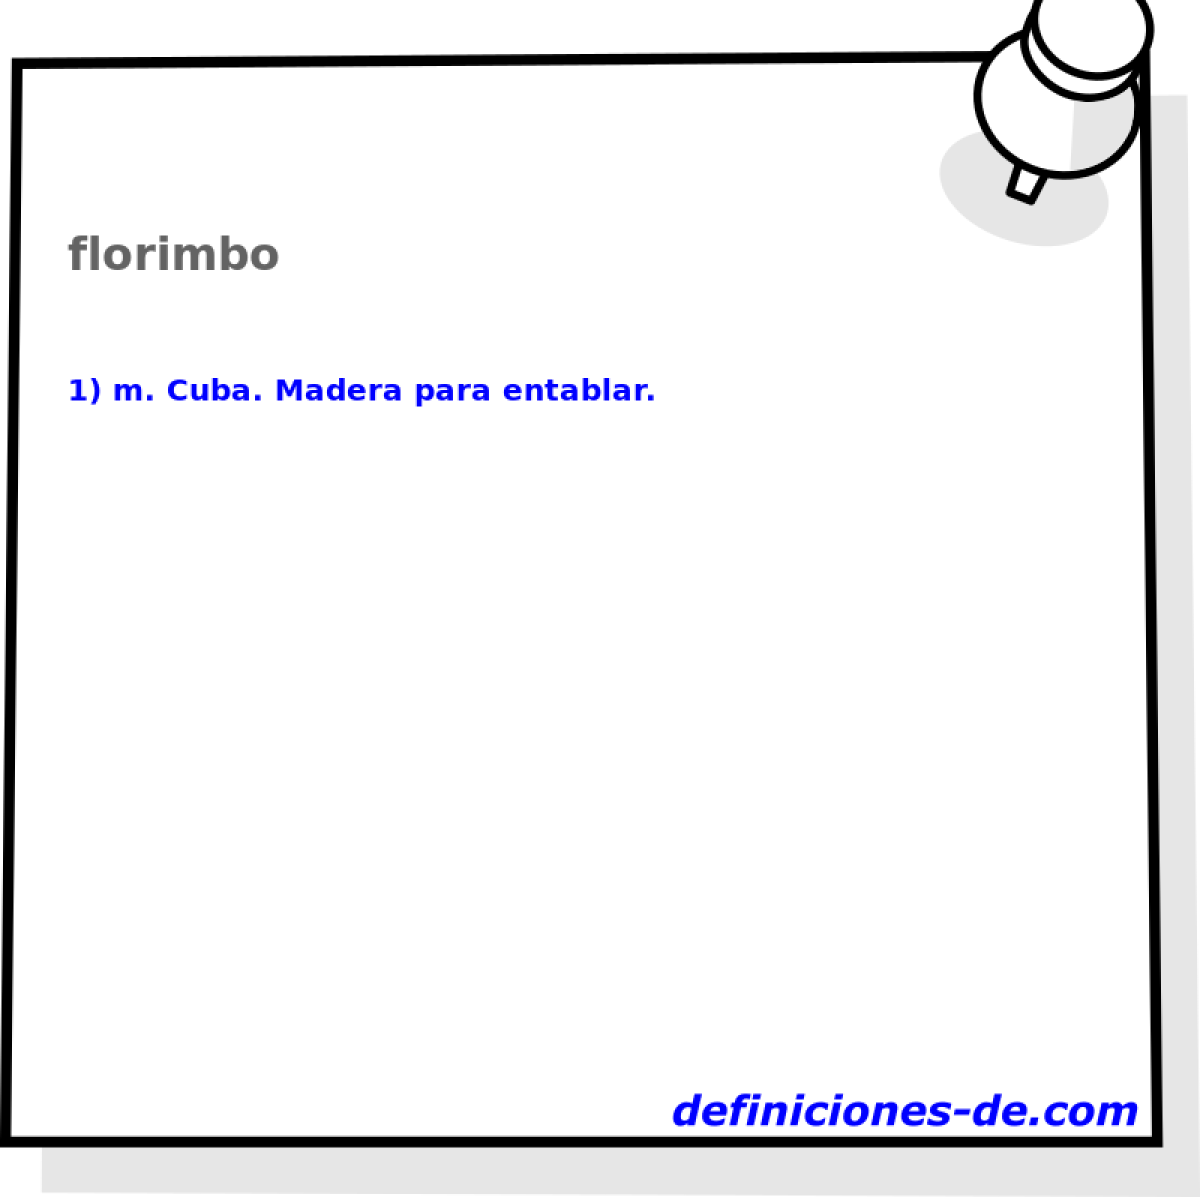 florimbo 